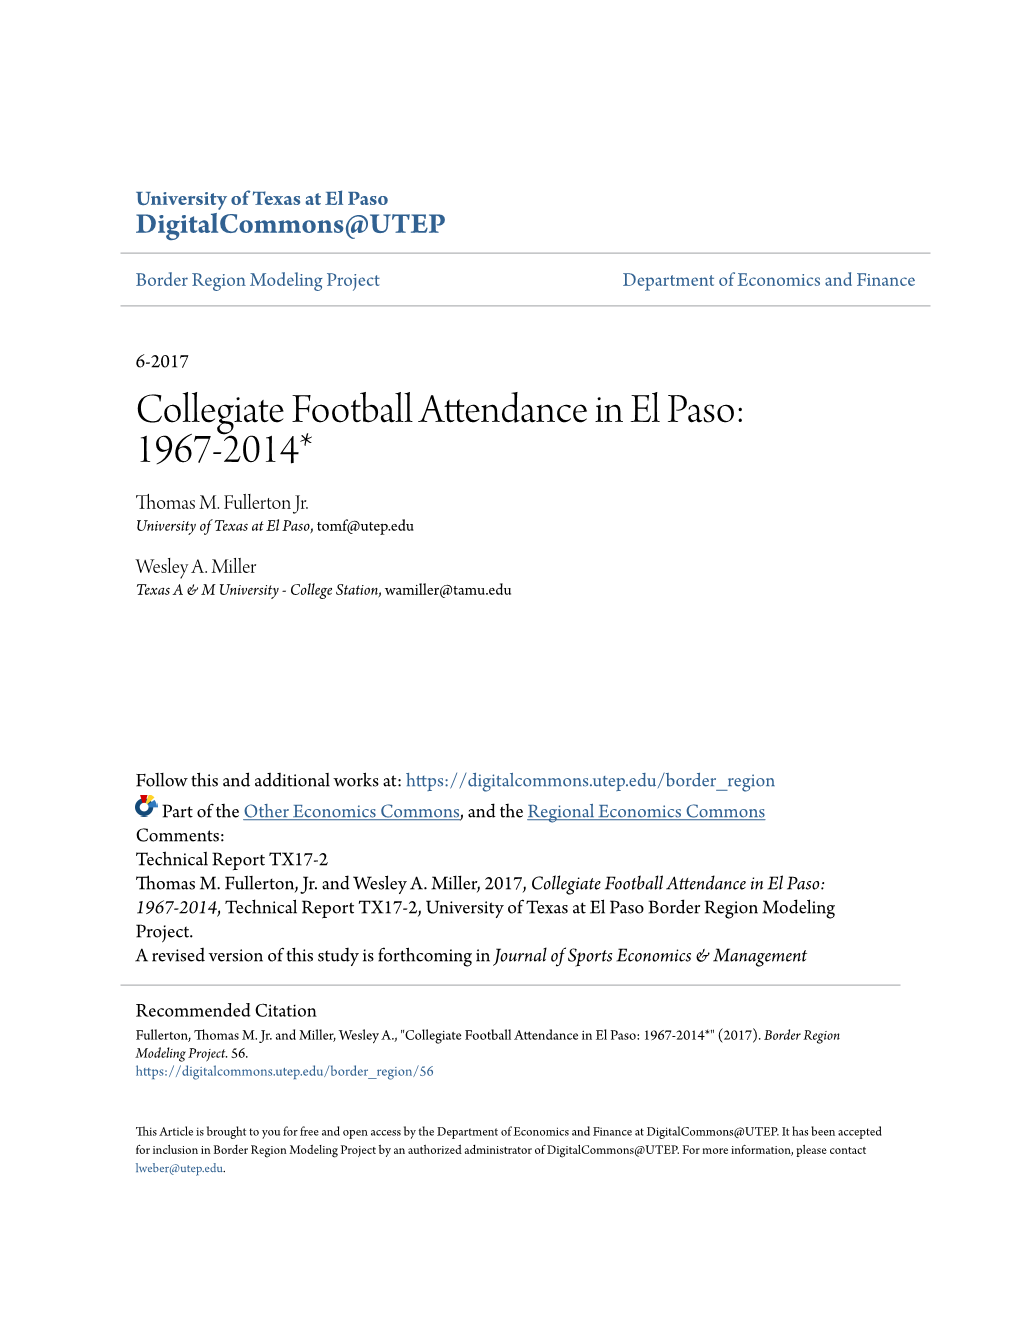 Collegiate Football Attendance in El Paso: 1967-2014* Thomas M